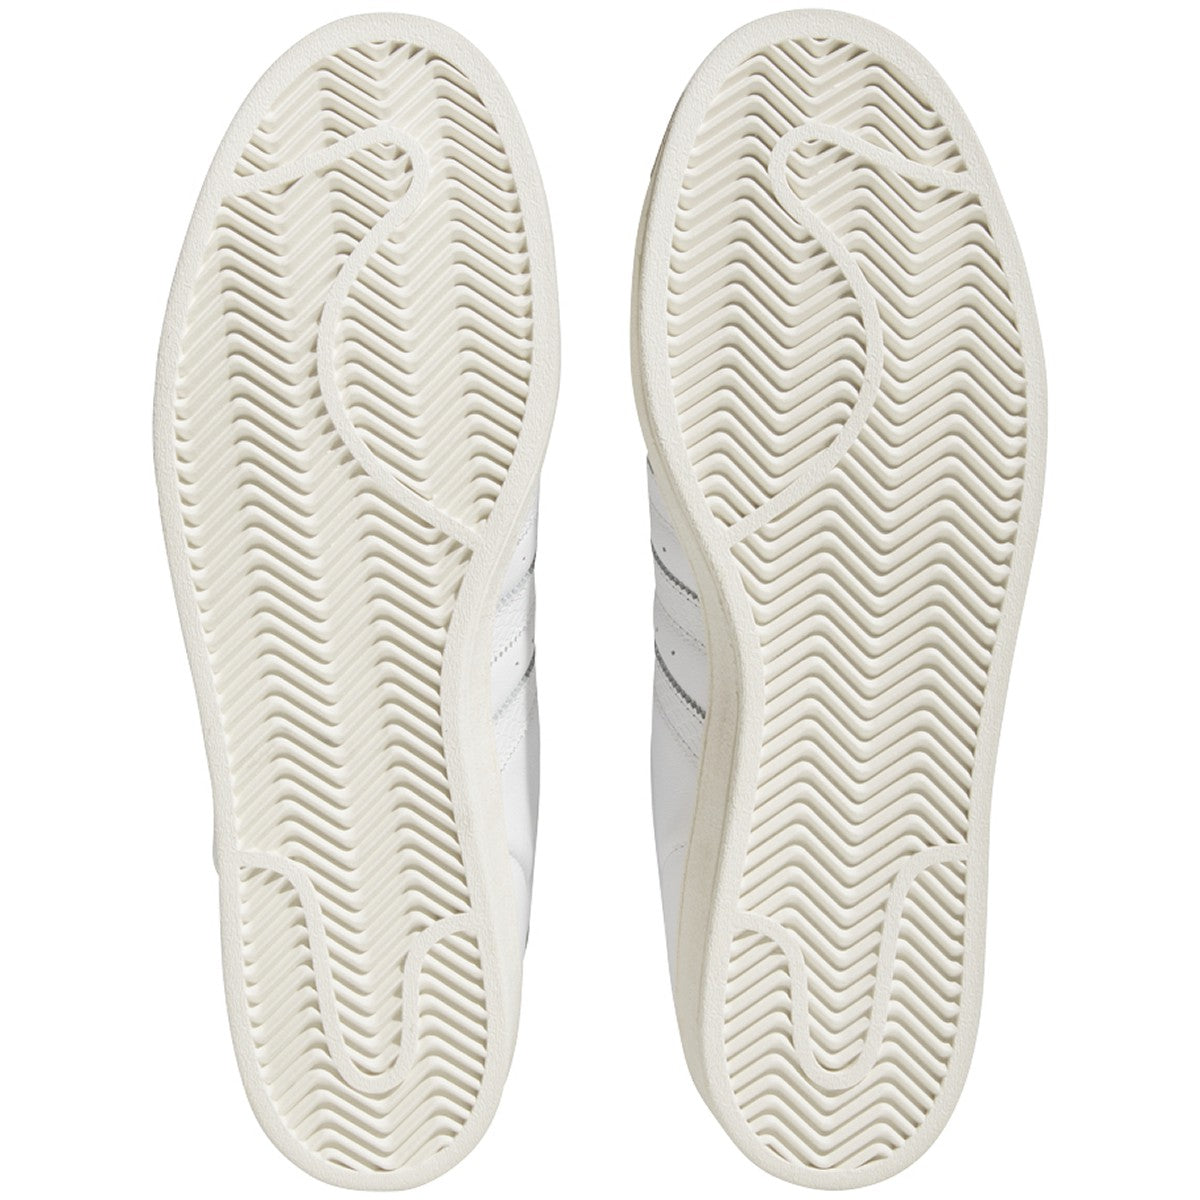 White/White Superstar ADV Adidas Skate Shoe Bottom